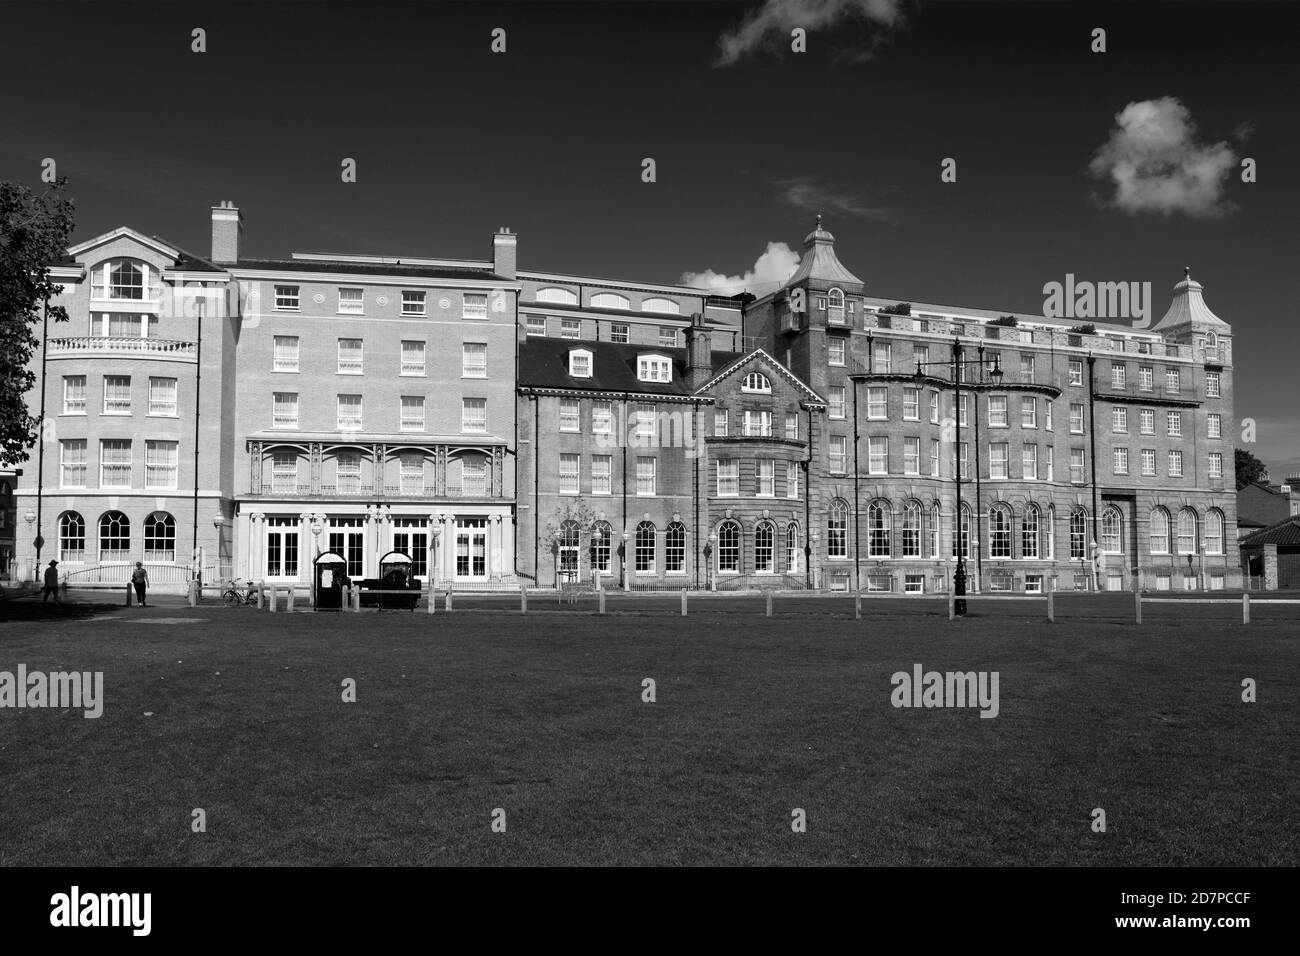 The University Arms Hotel, Parkers Piece, Cambridge City, Cambridgeshire, England, UK Stock Photo